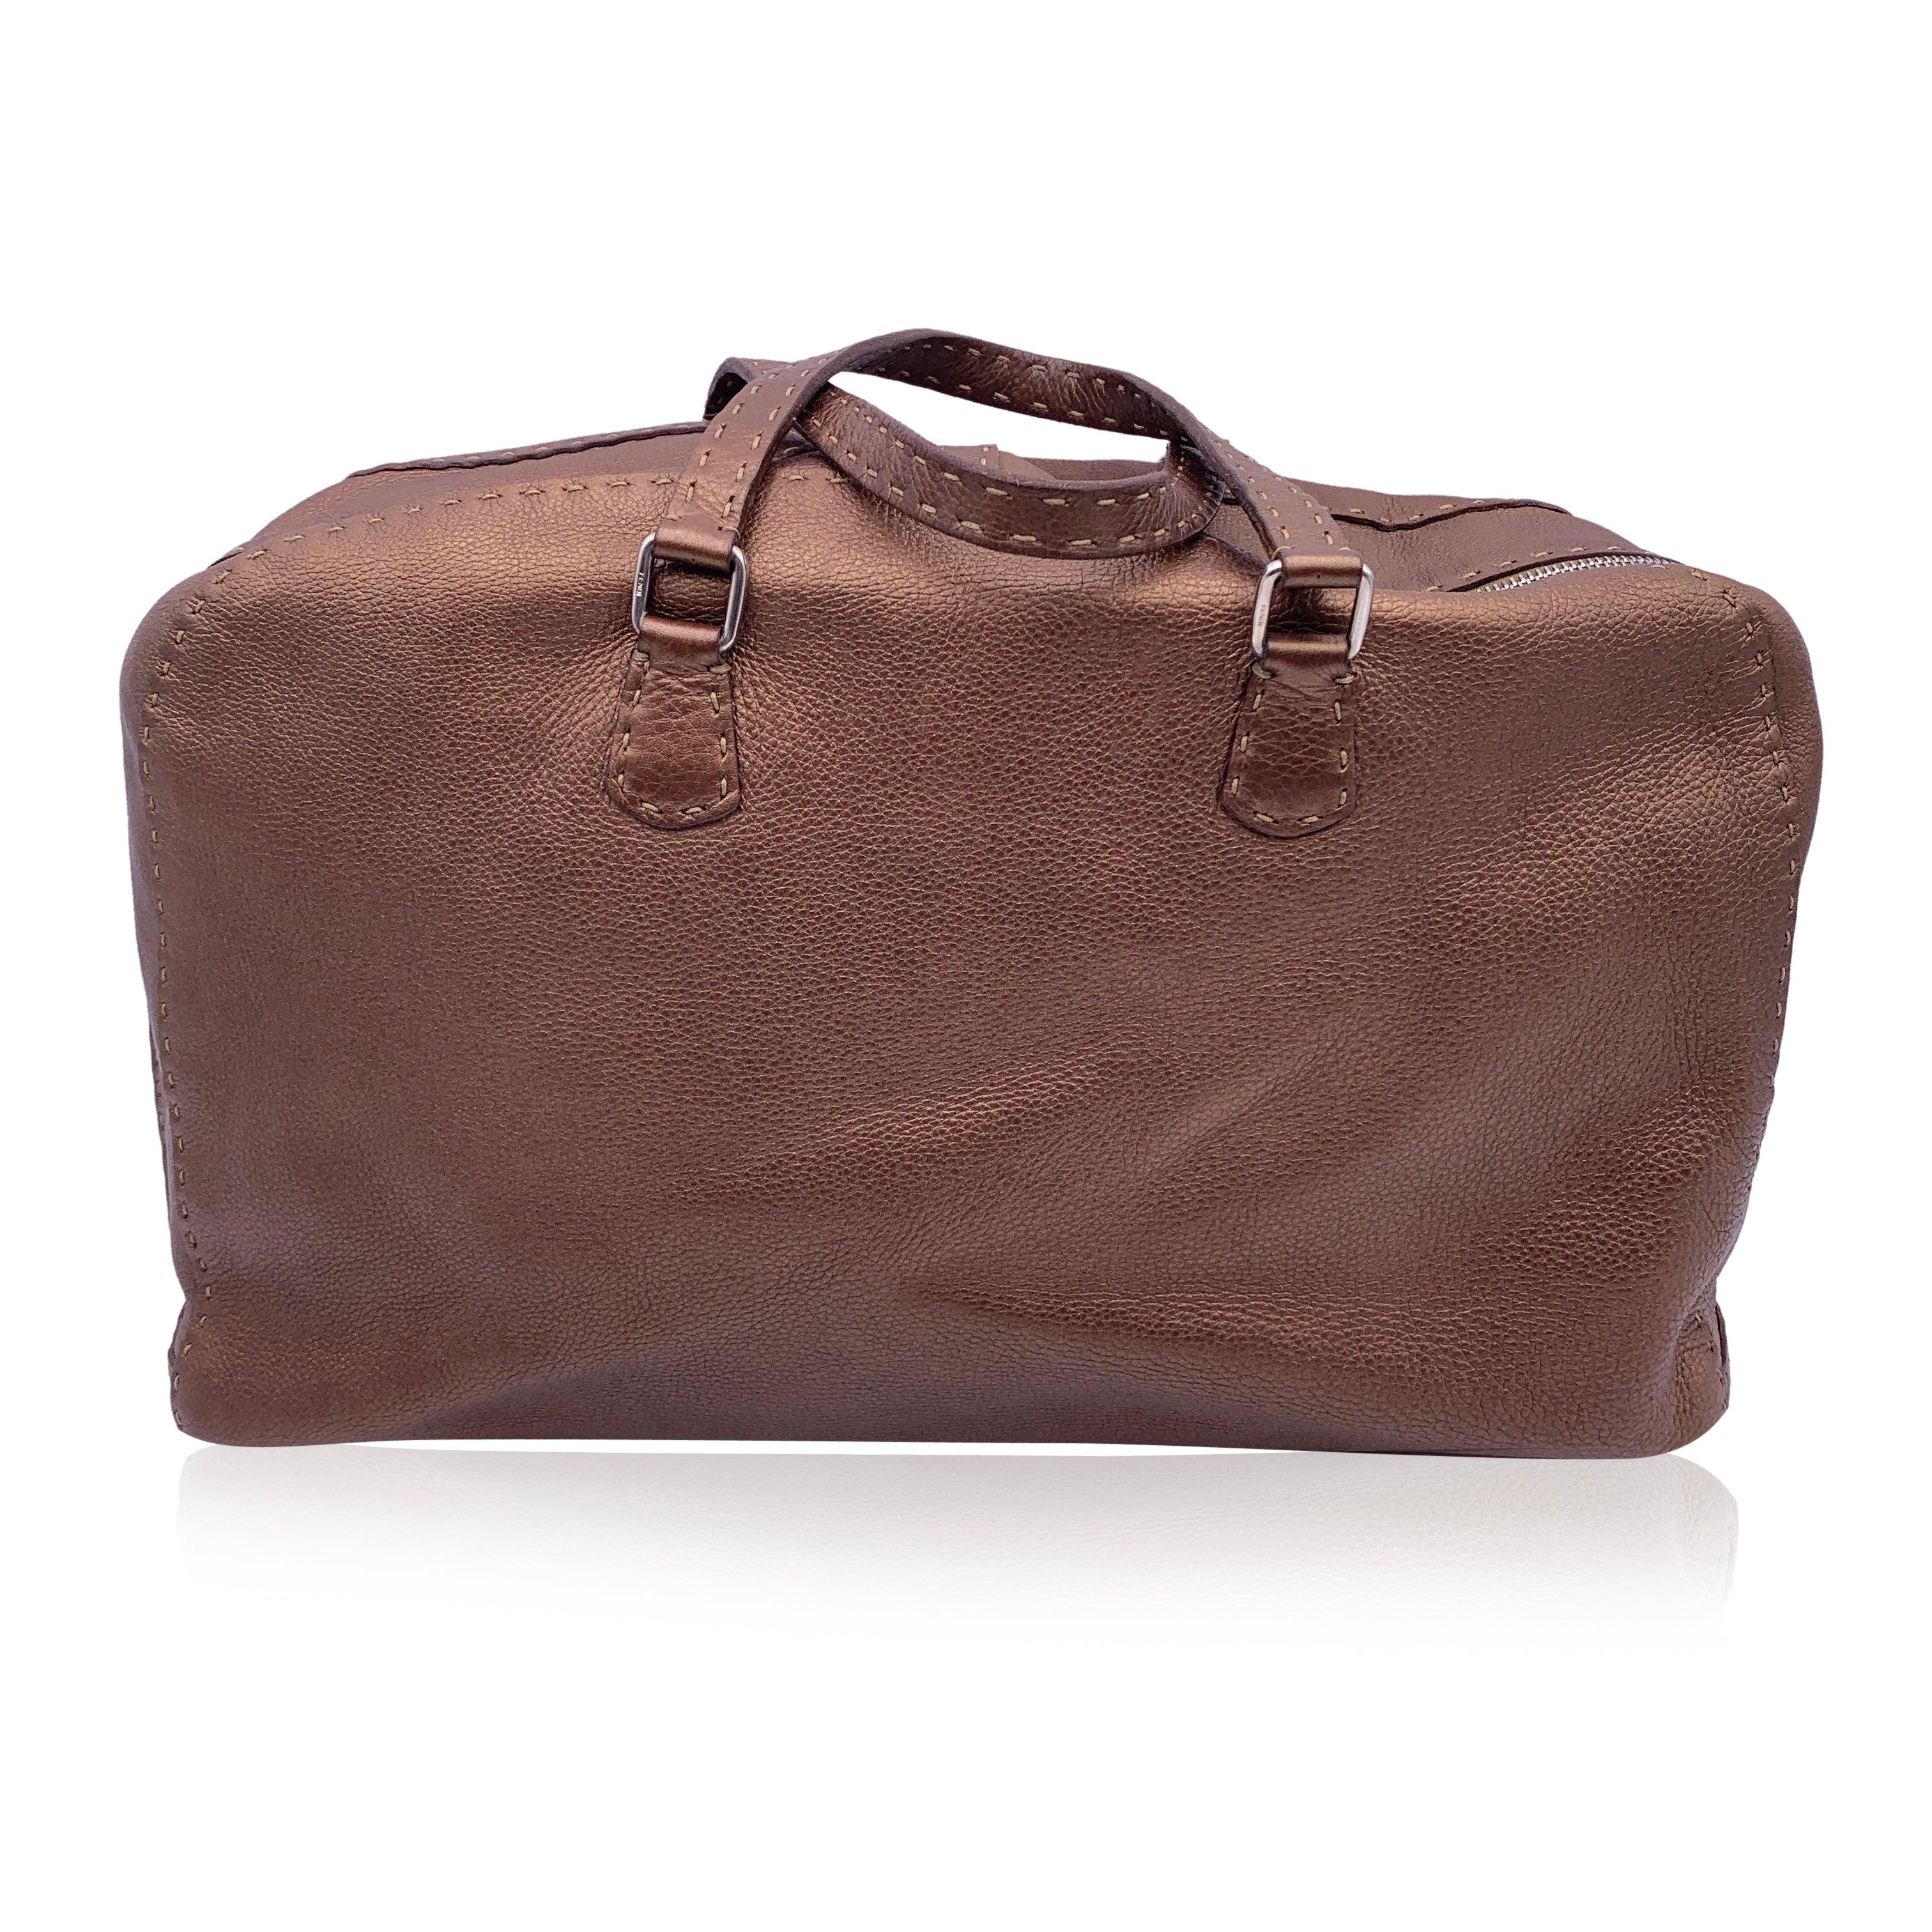 Fendi Selleria Brown Metallic Leather Weekender Bag Satchel In Good Condition For Sale In Rome, Rome